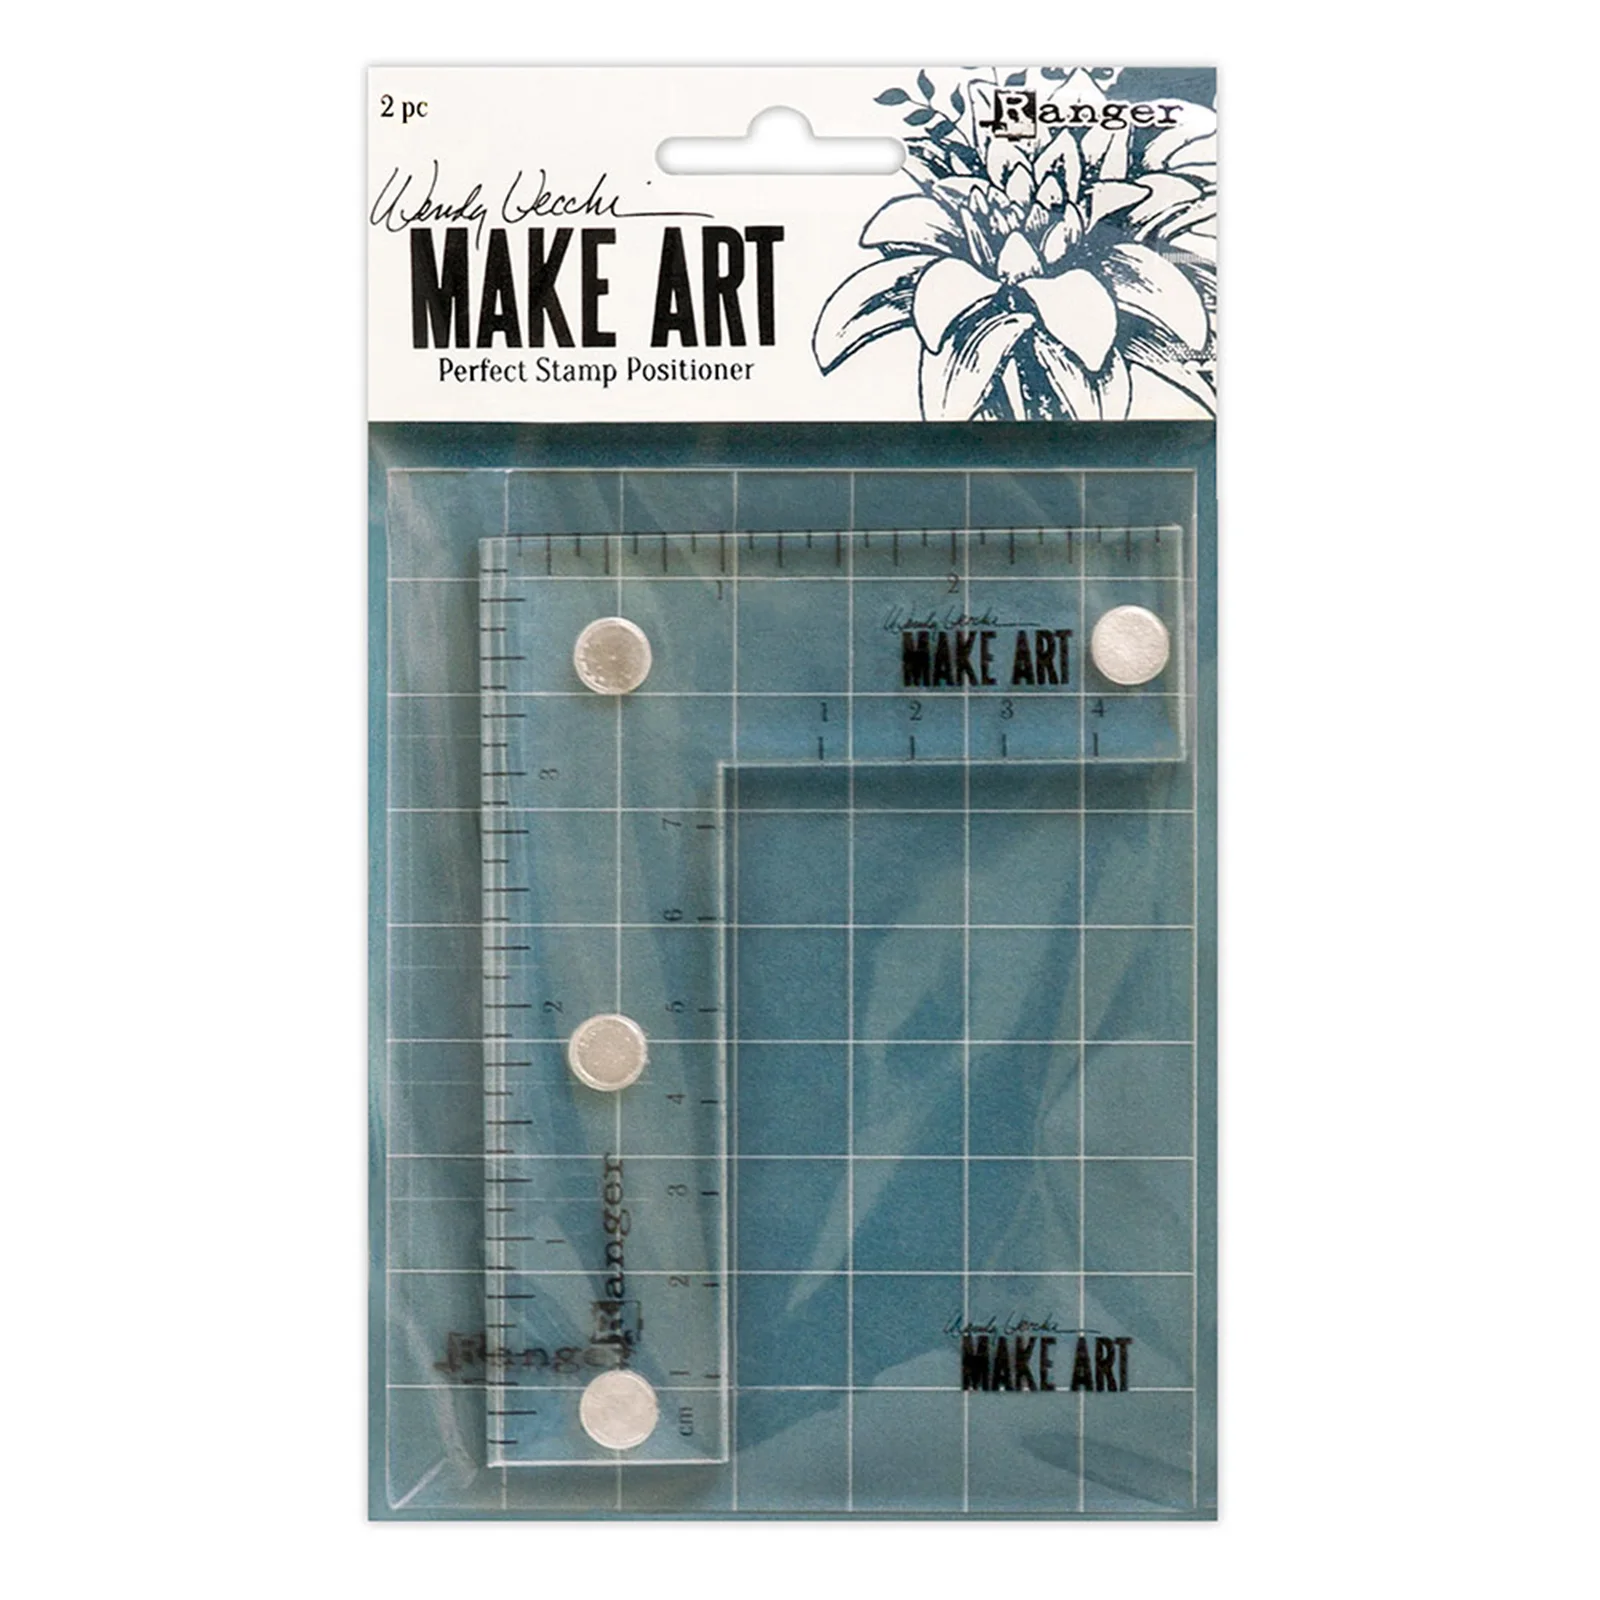 Make Art Perfect Stamp Positioner